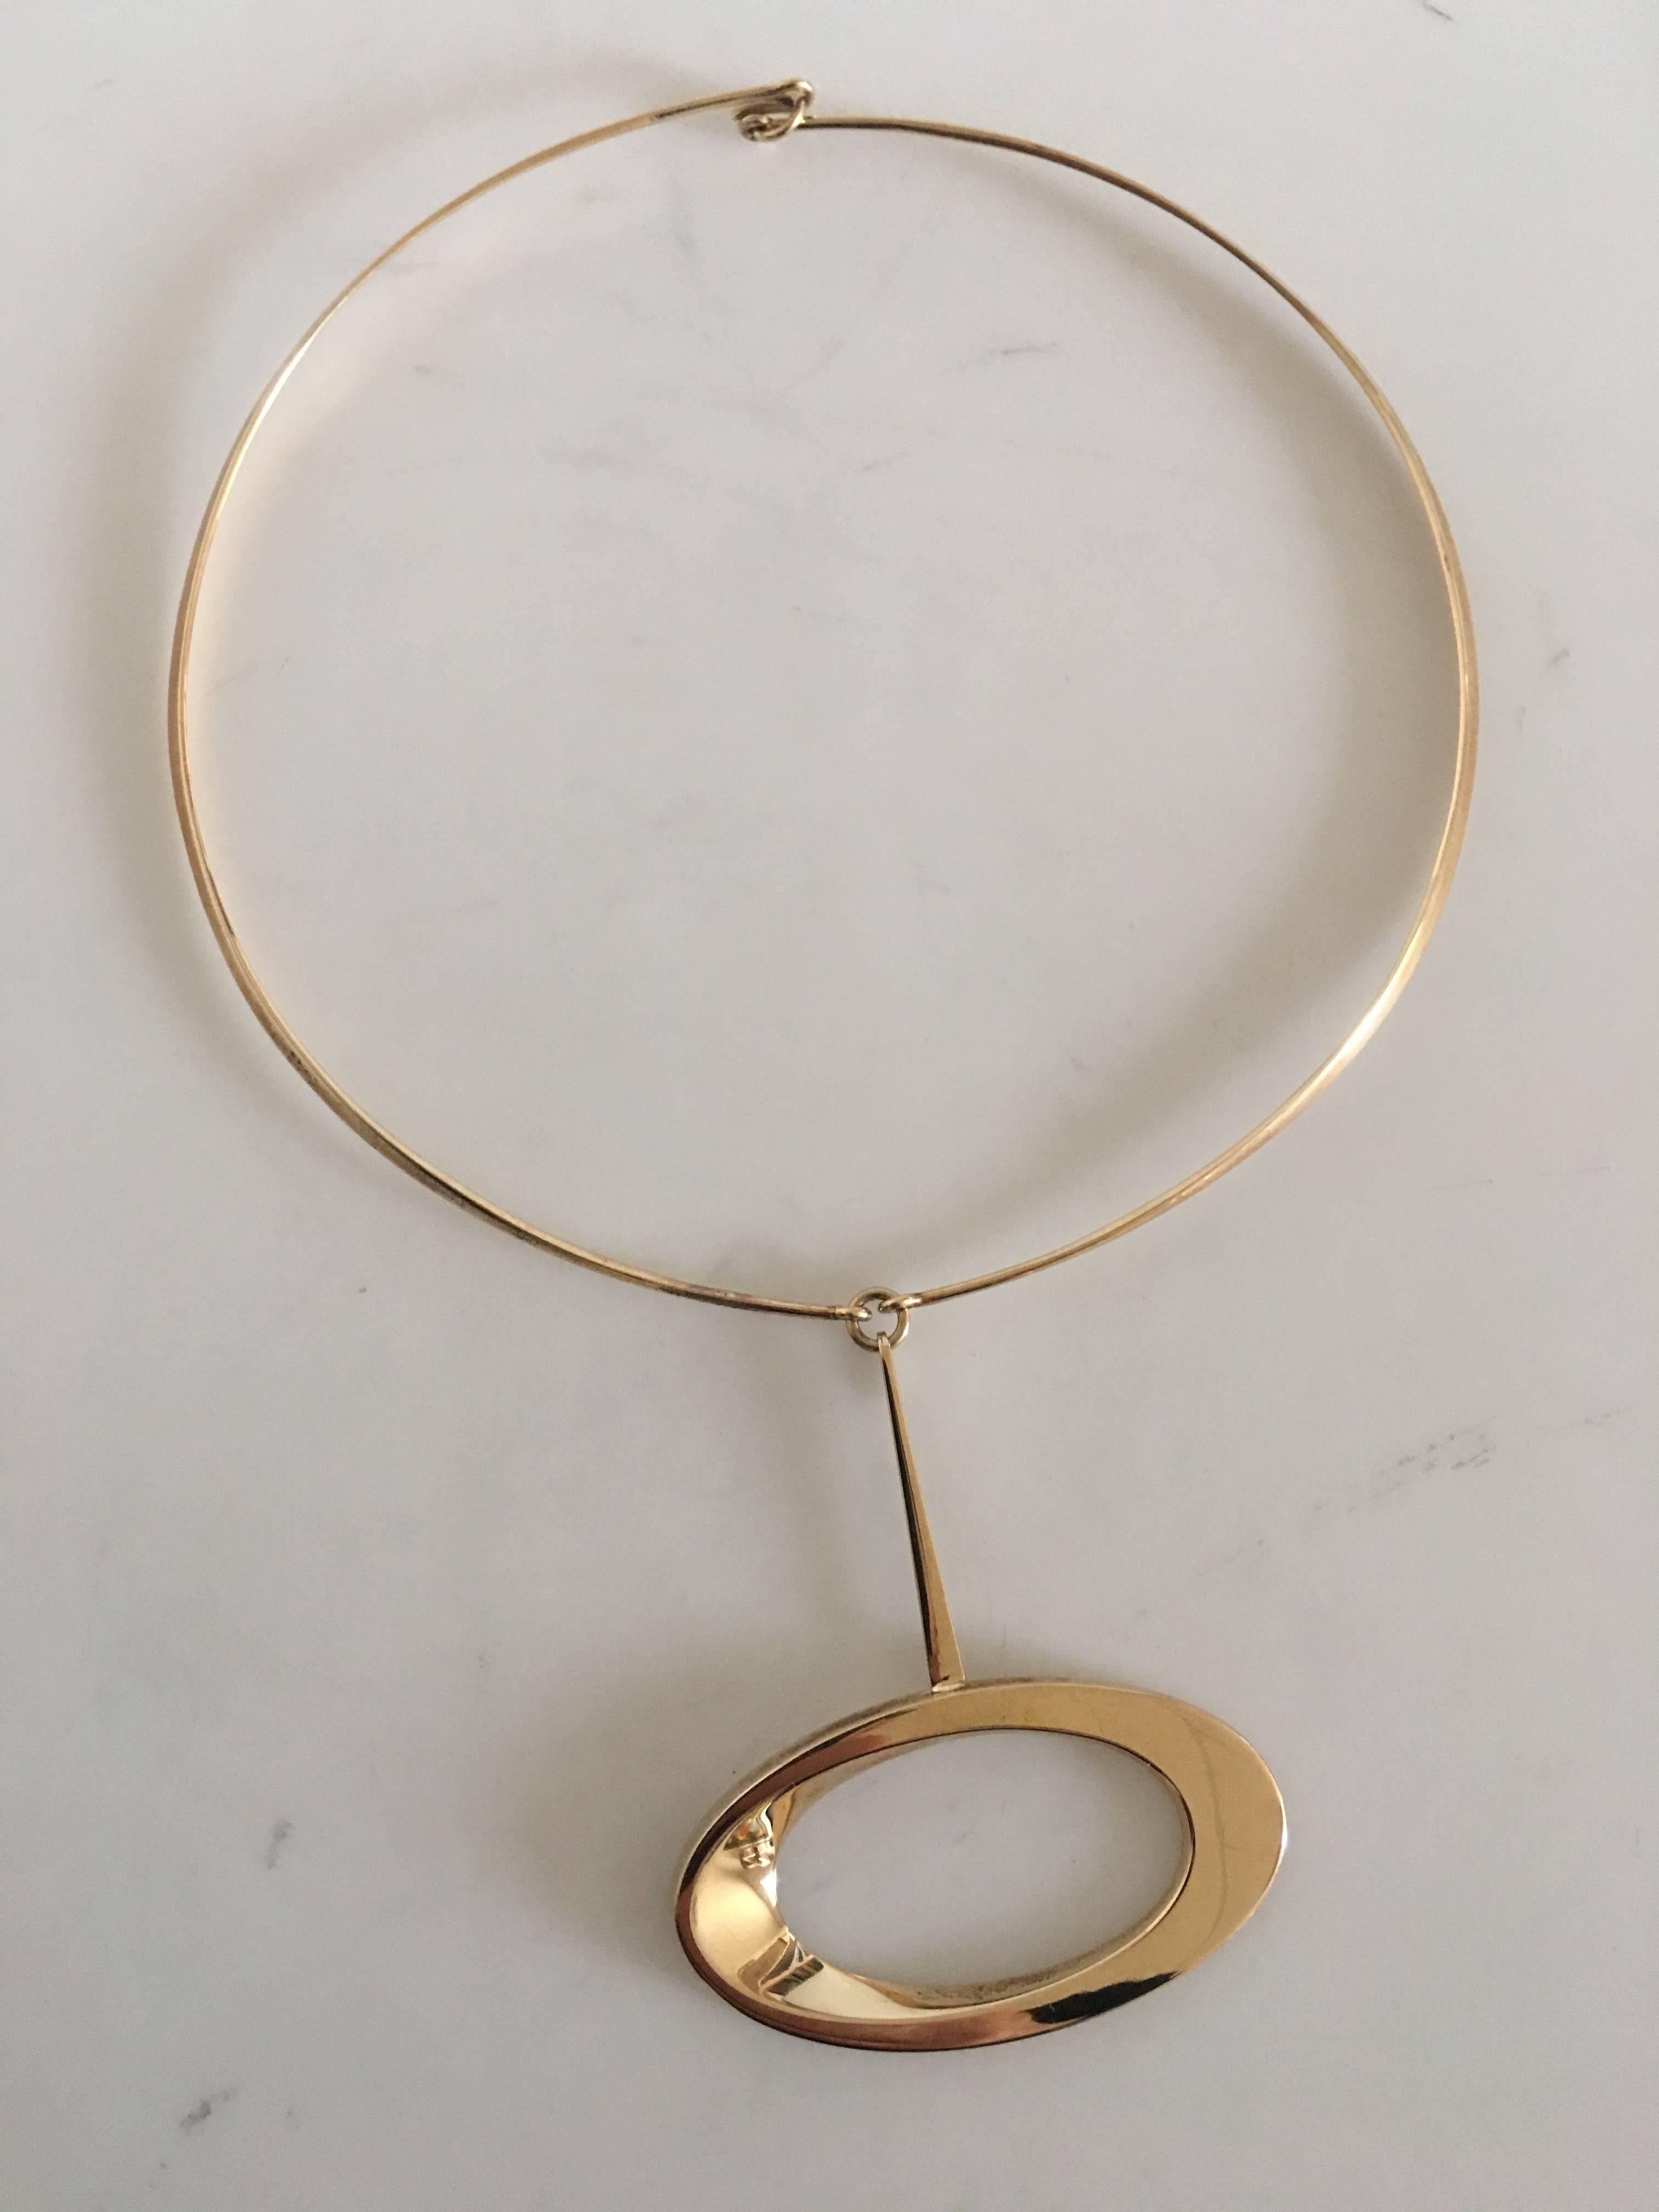 Hans Hansen 14K Gold Pendant No. 103 in 14K Gold Chain (Not by Hans Hansen). Diameter of the neckring measures 12 cm. Oval diameter of the pendant measures 5.5 cm. Weighs 23 grams.
